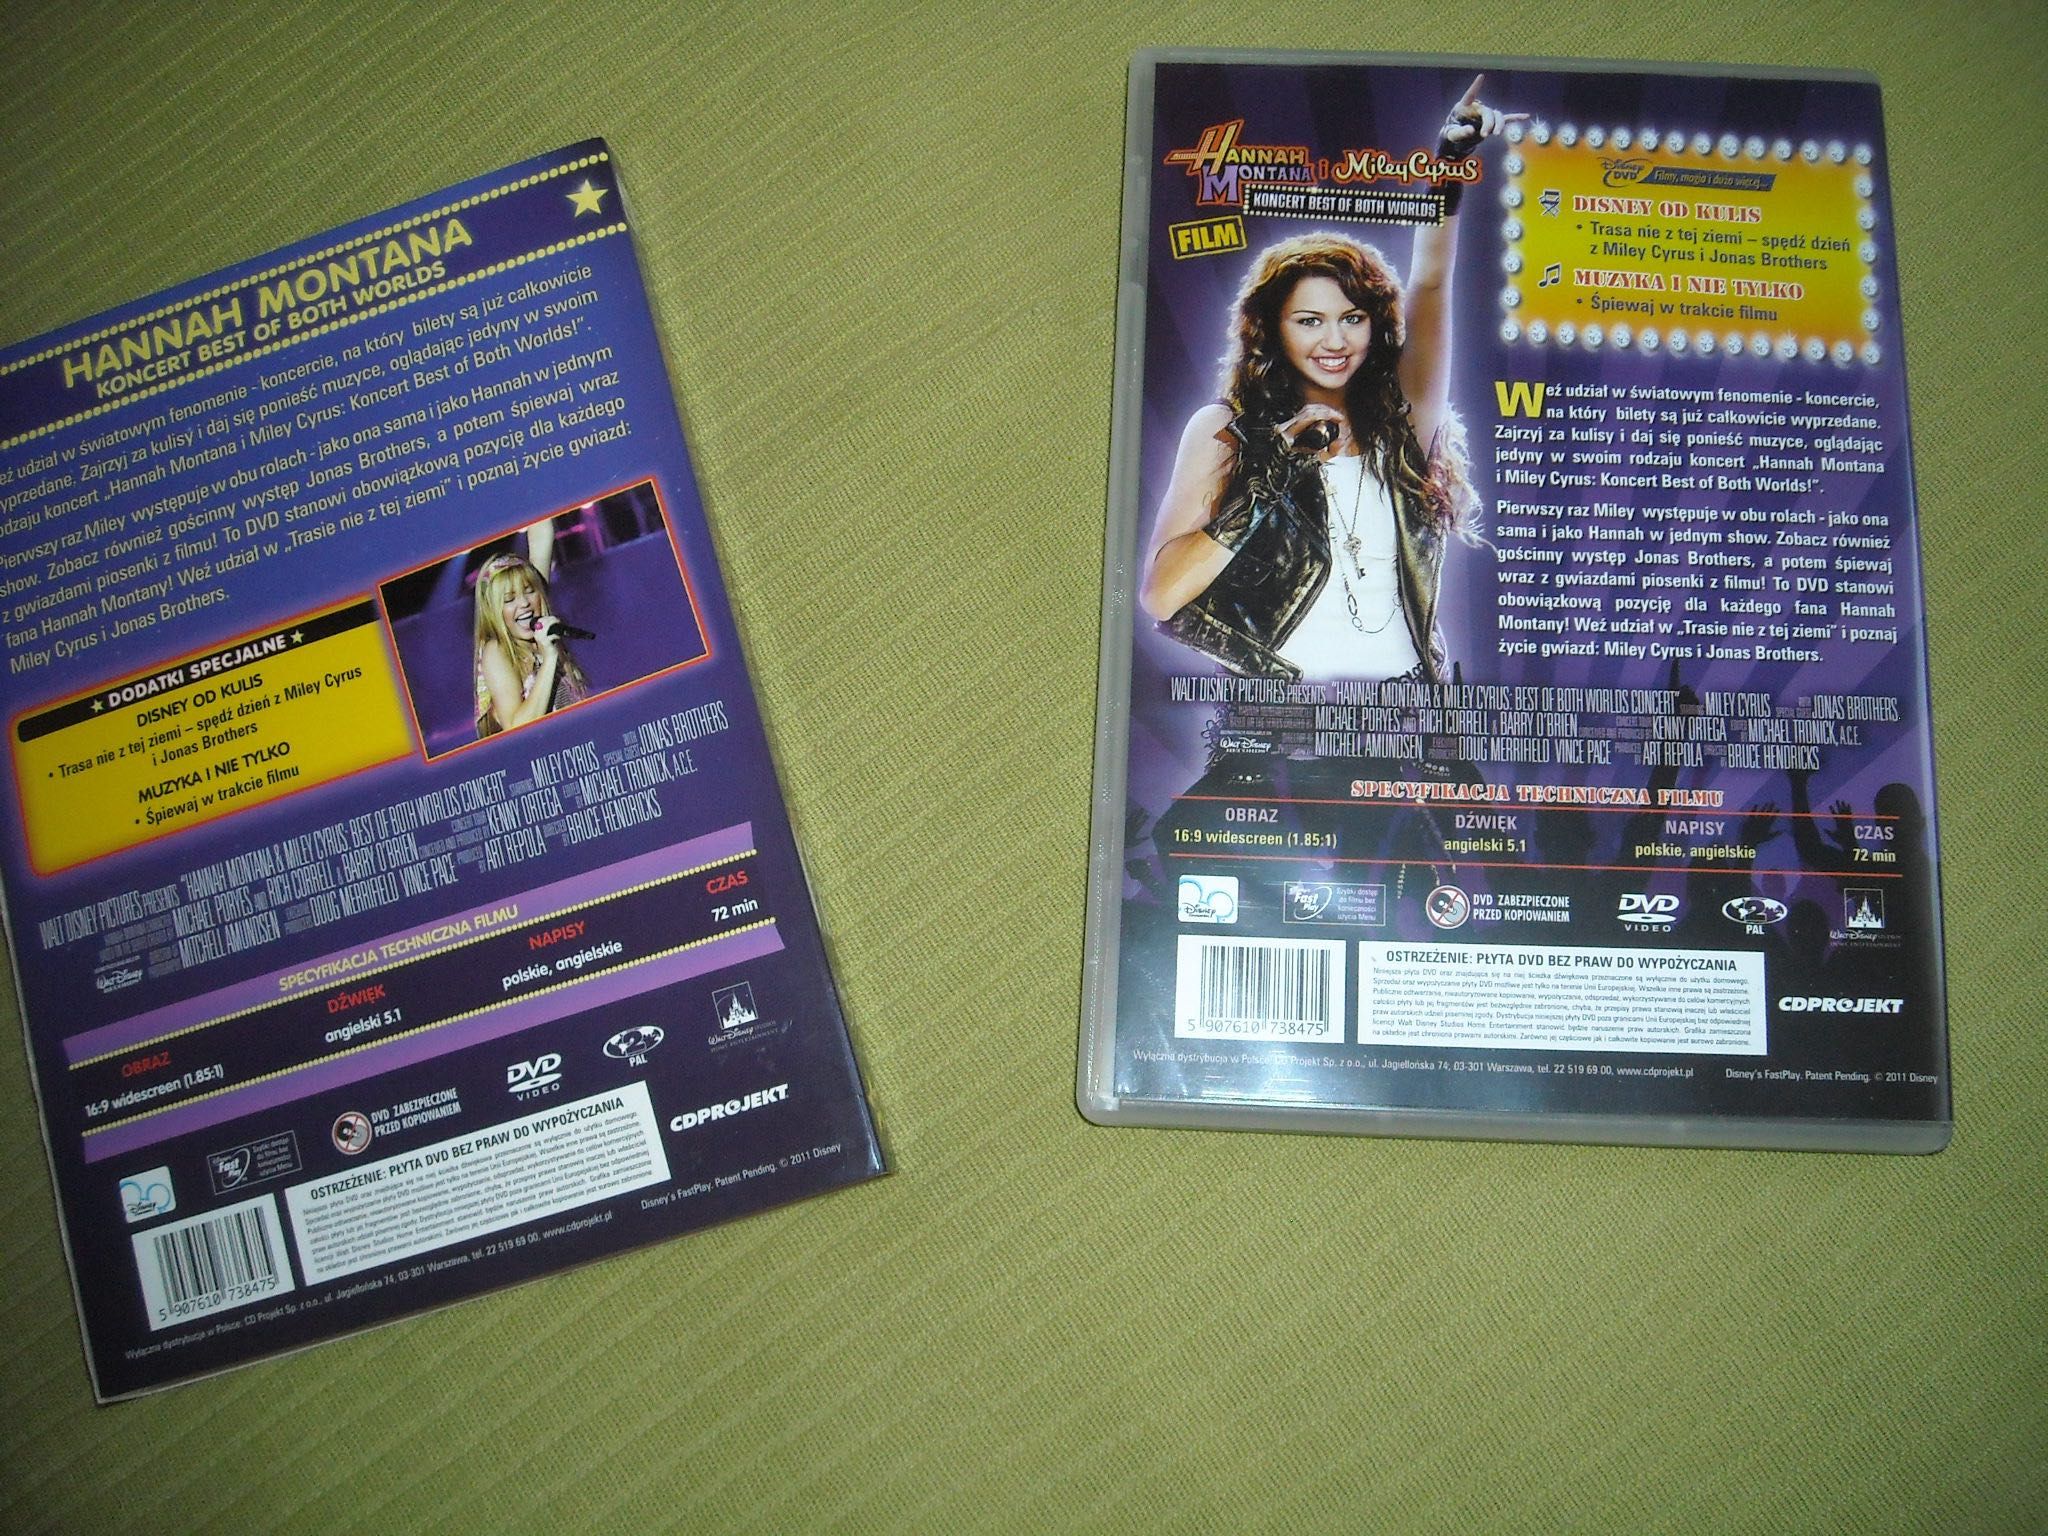 Hannah Montana płyta DVD-koncert "Best of Both Worlds!”